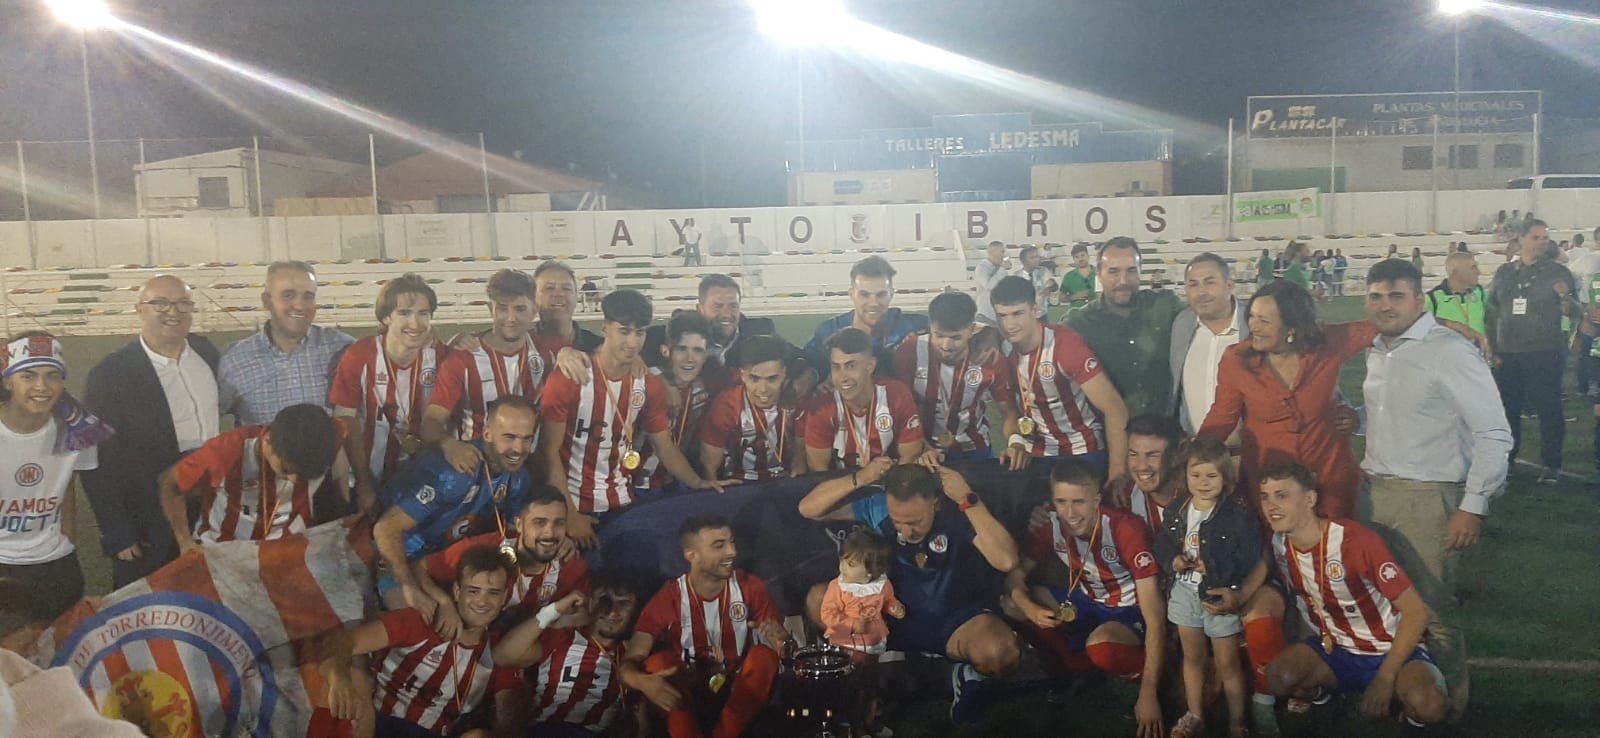 El UDC Torredonjimeno B alza la Copa Subdelegada en Ibros